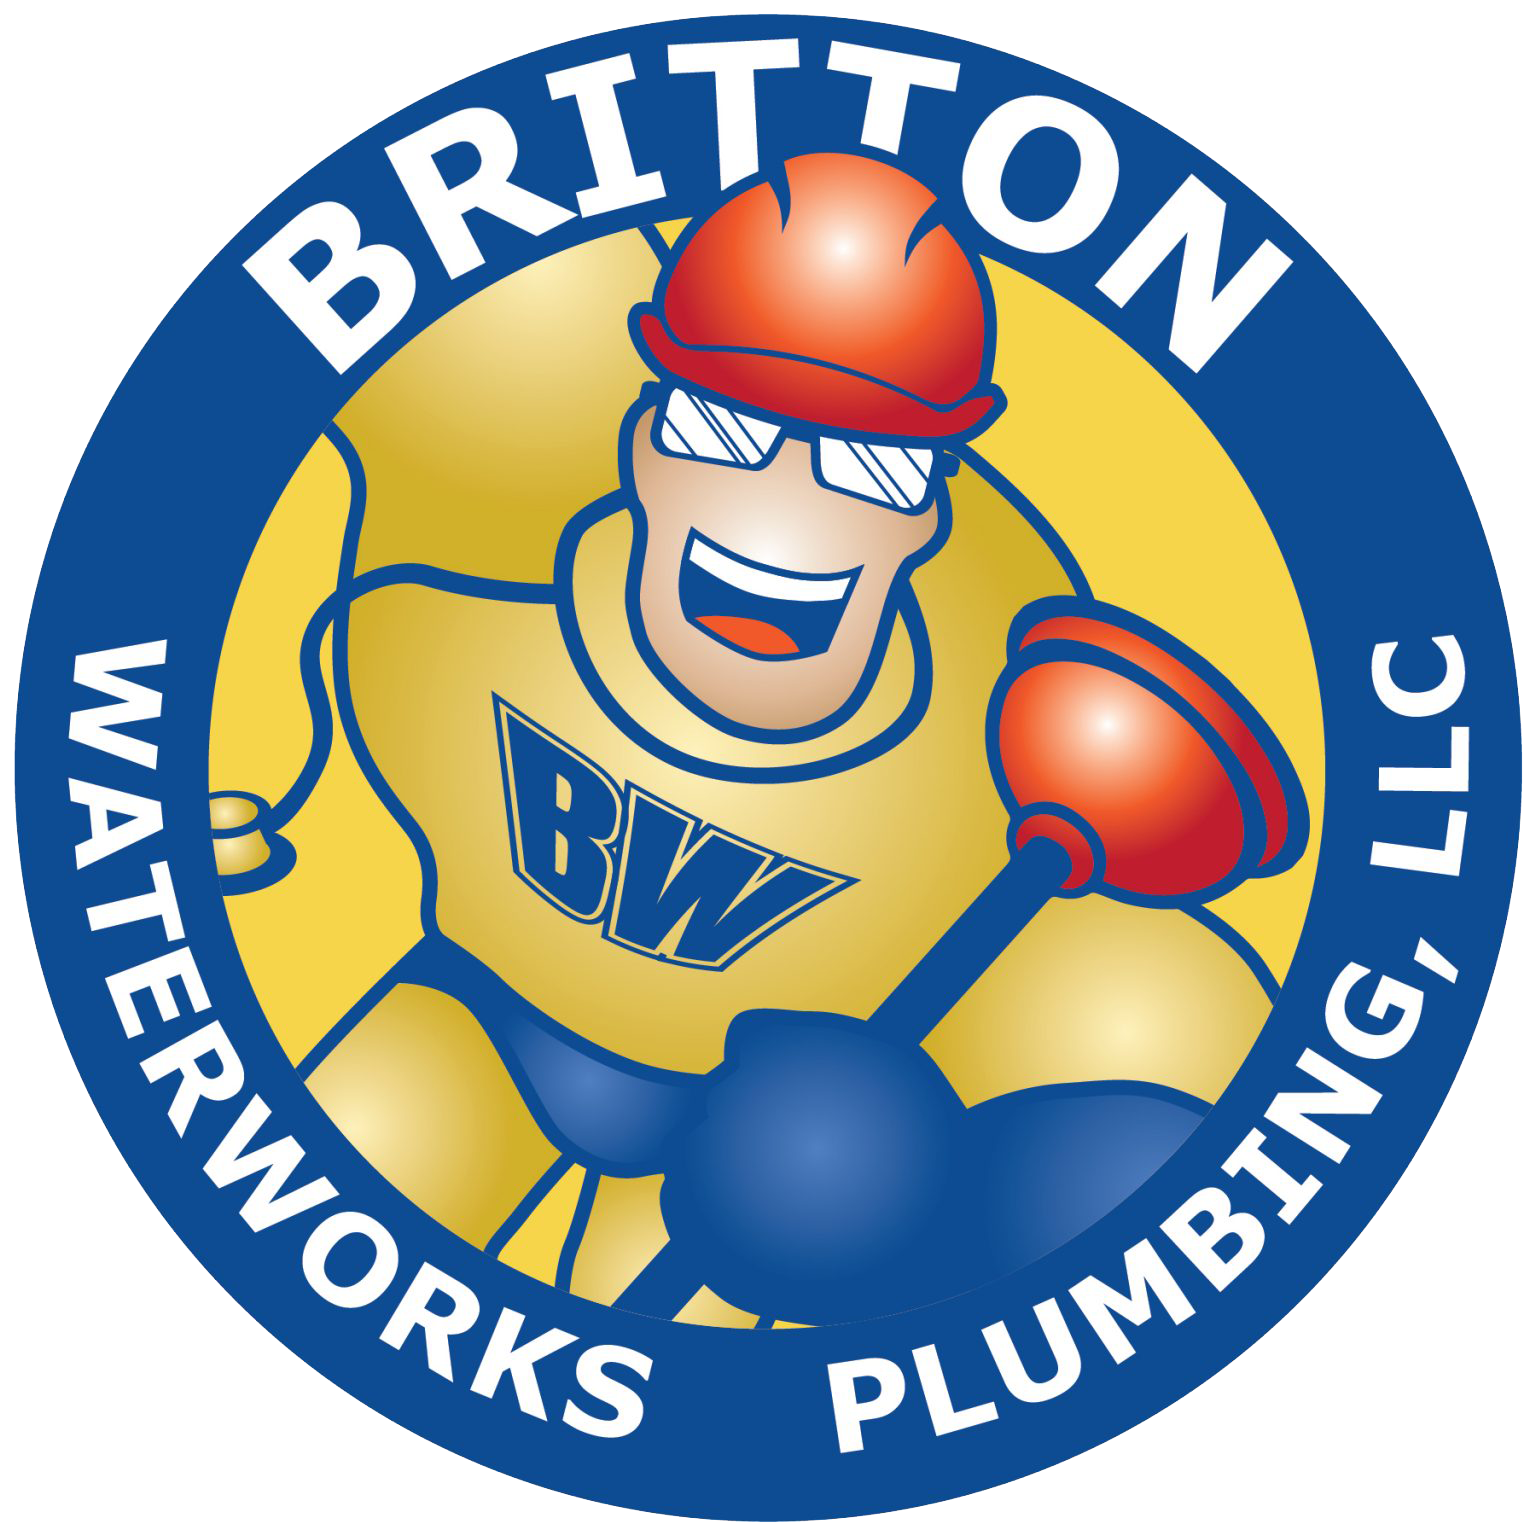 BWWP Logo 2017 Shirt Round Details Lg 01 1920w 